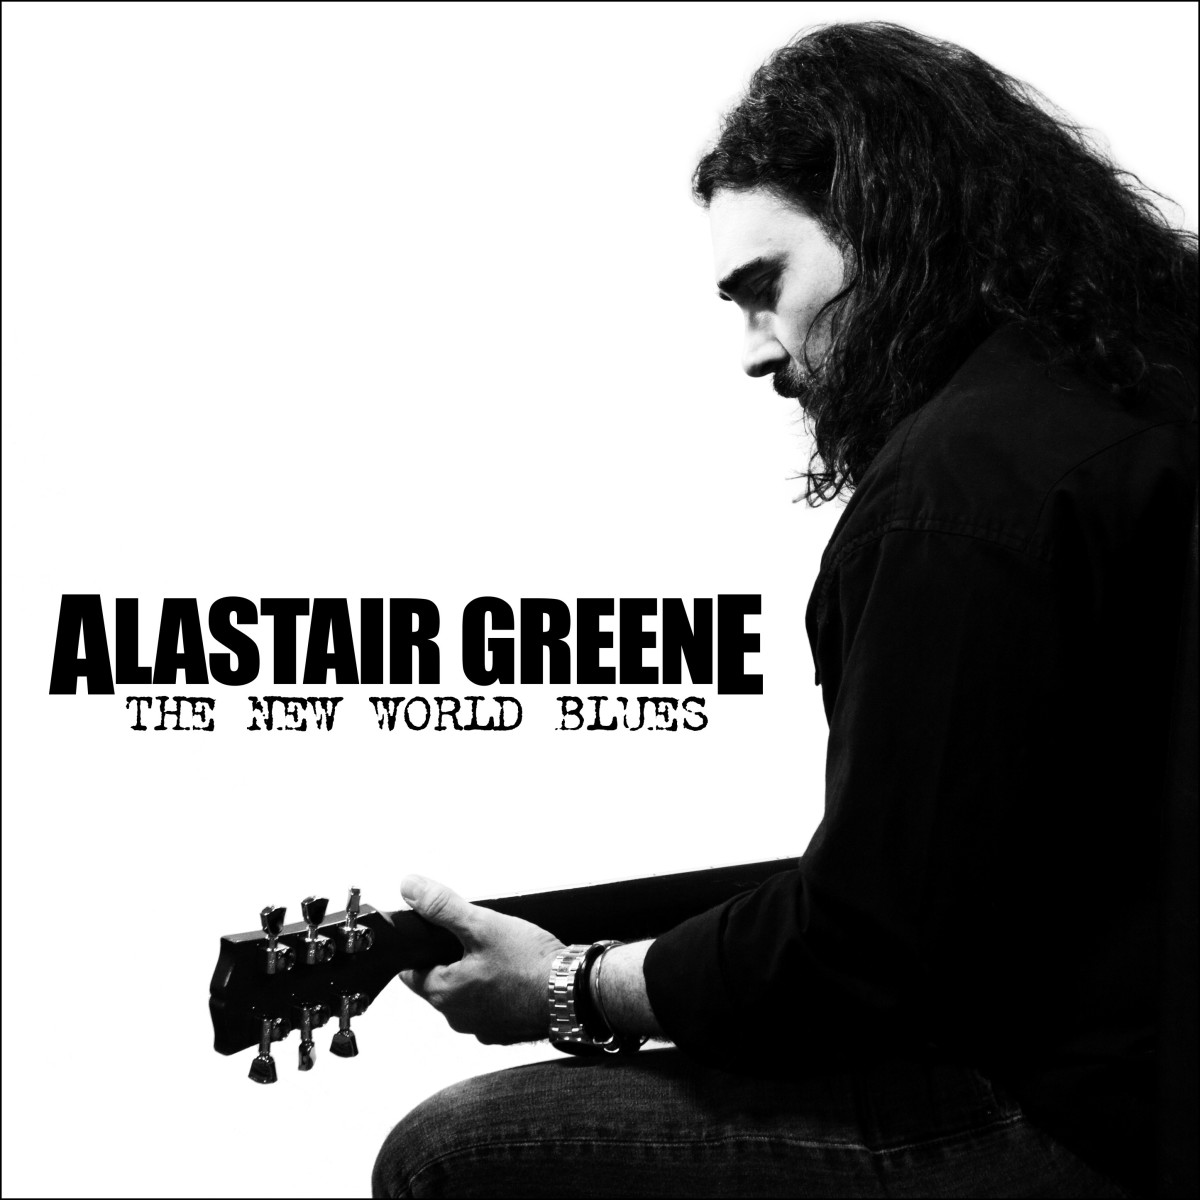 Alastair Greene